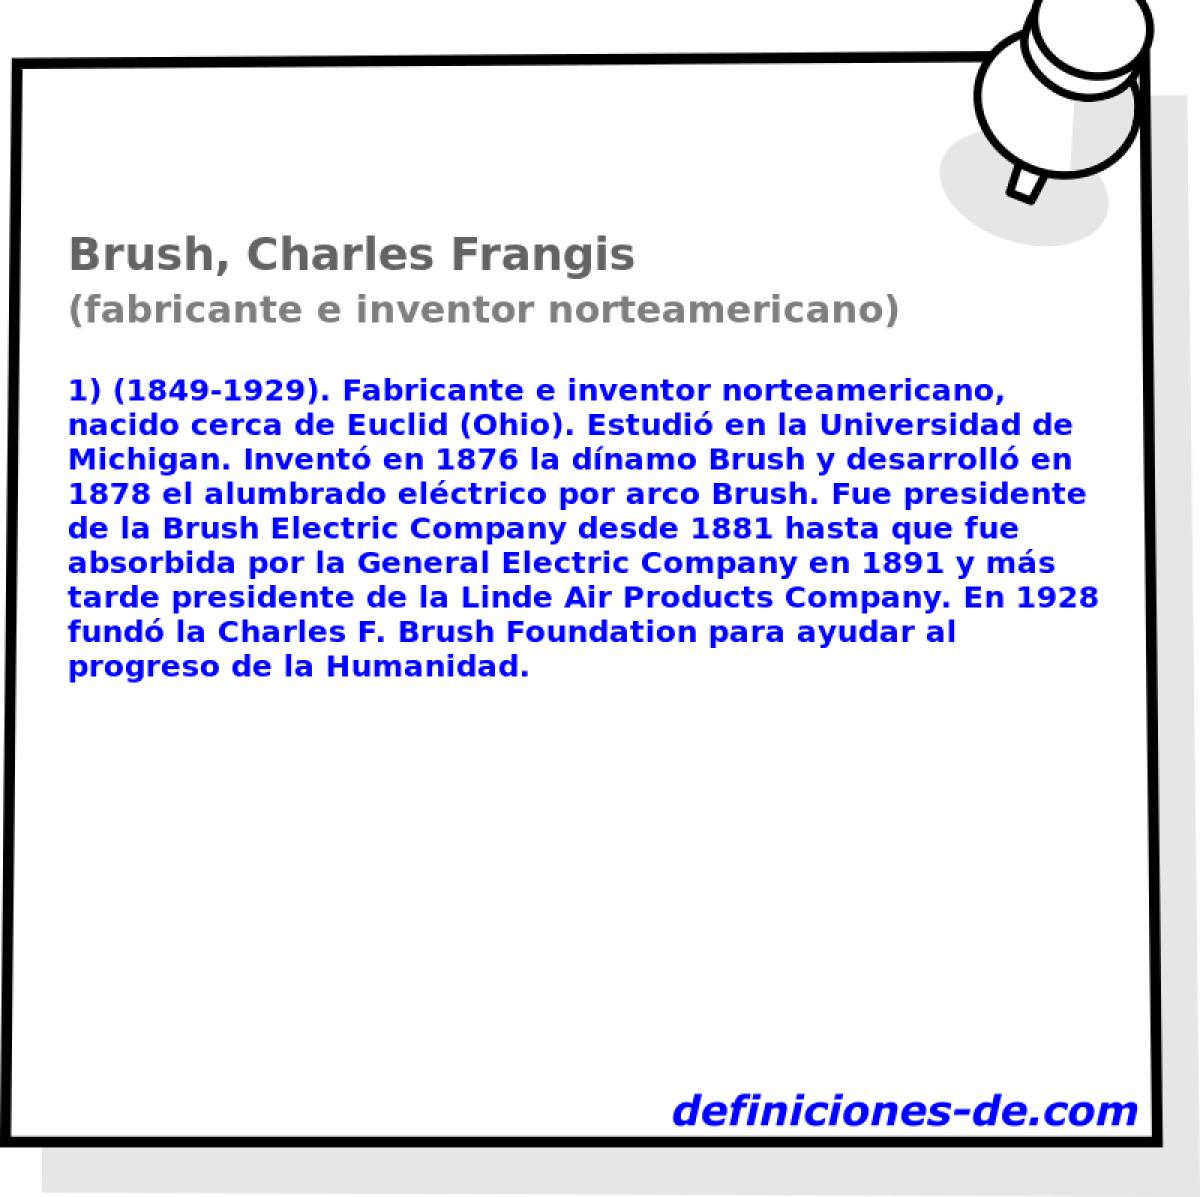 Brush, Charles Frangis (fabricante e inventor norteamericano)